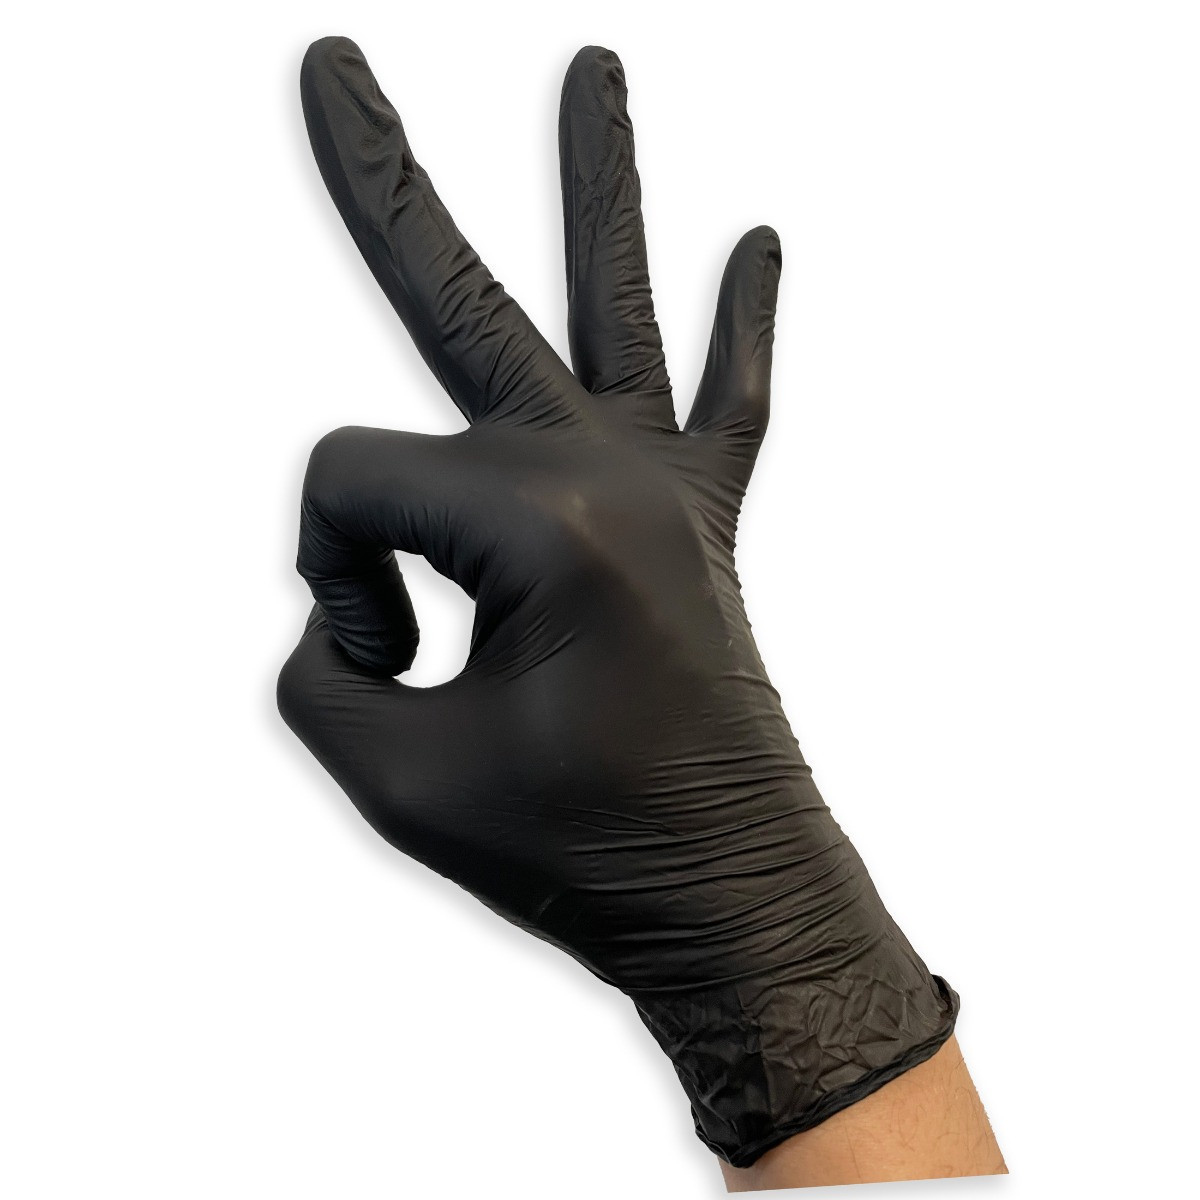 Rękawiczki nitrylowe czarne rozmiar s (6-7) 100 sztuk medasept